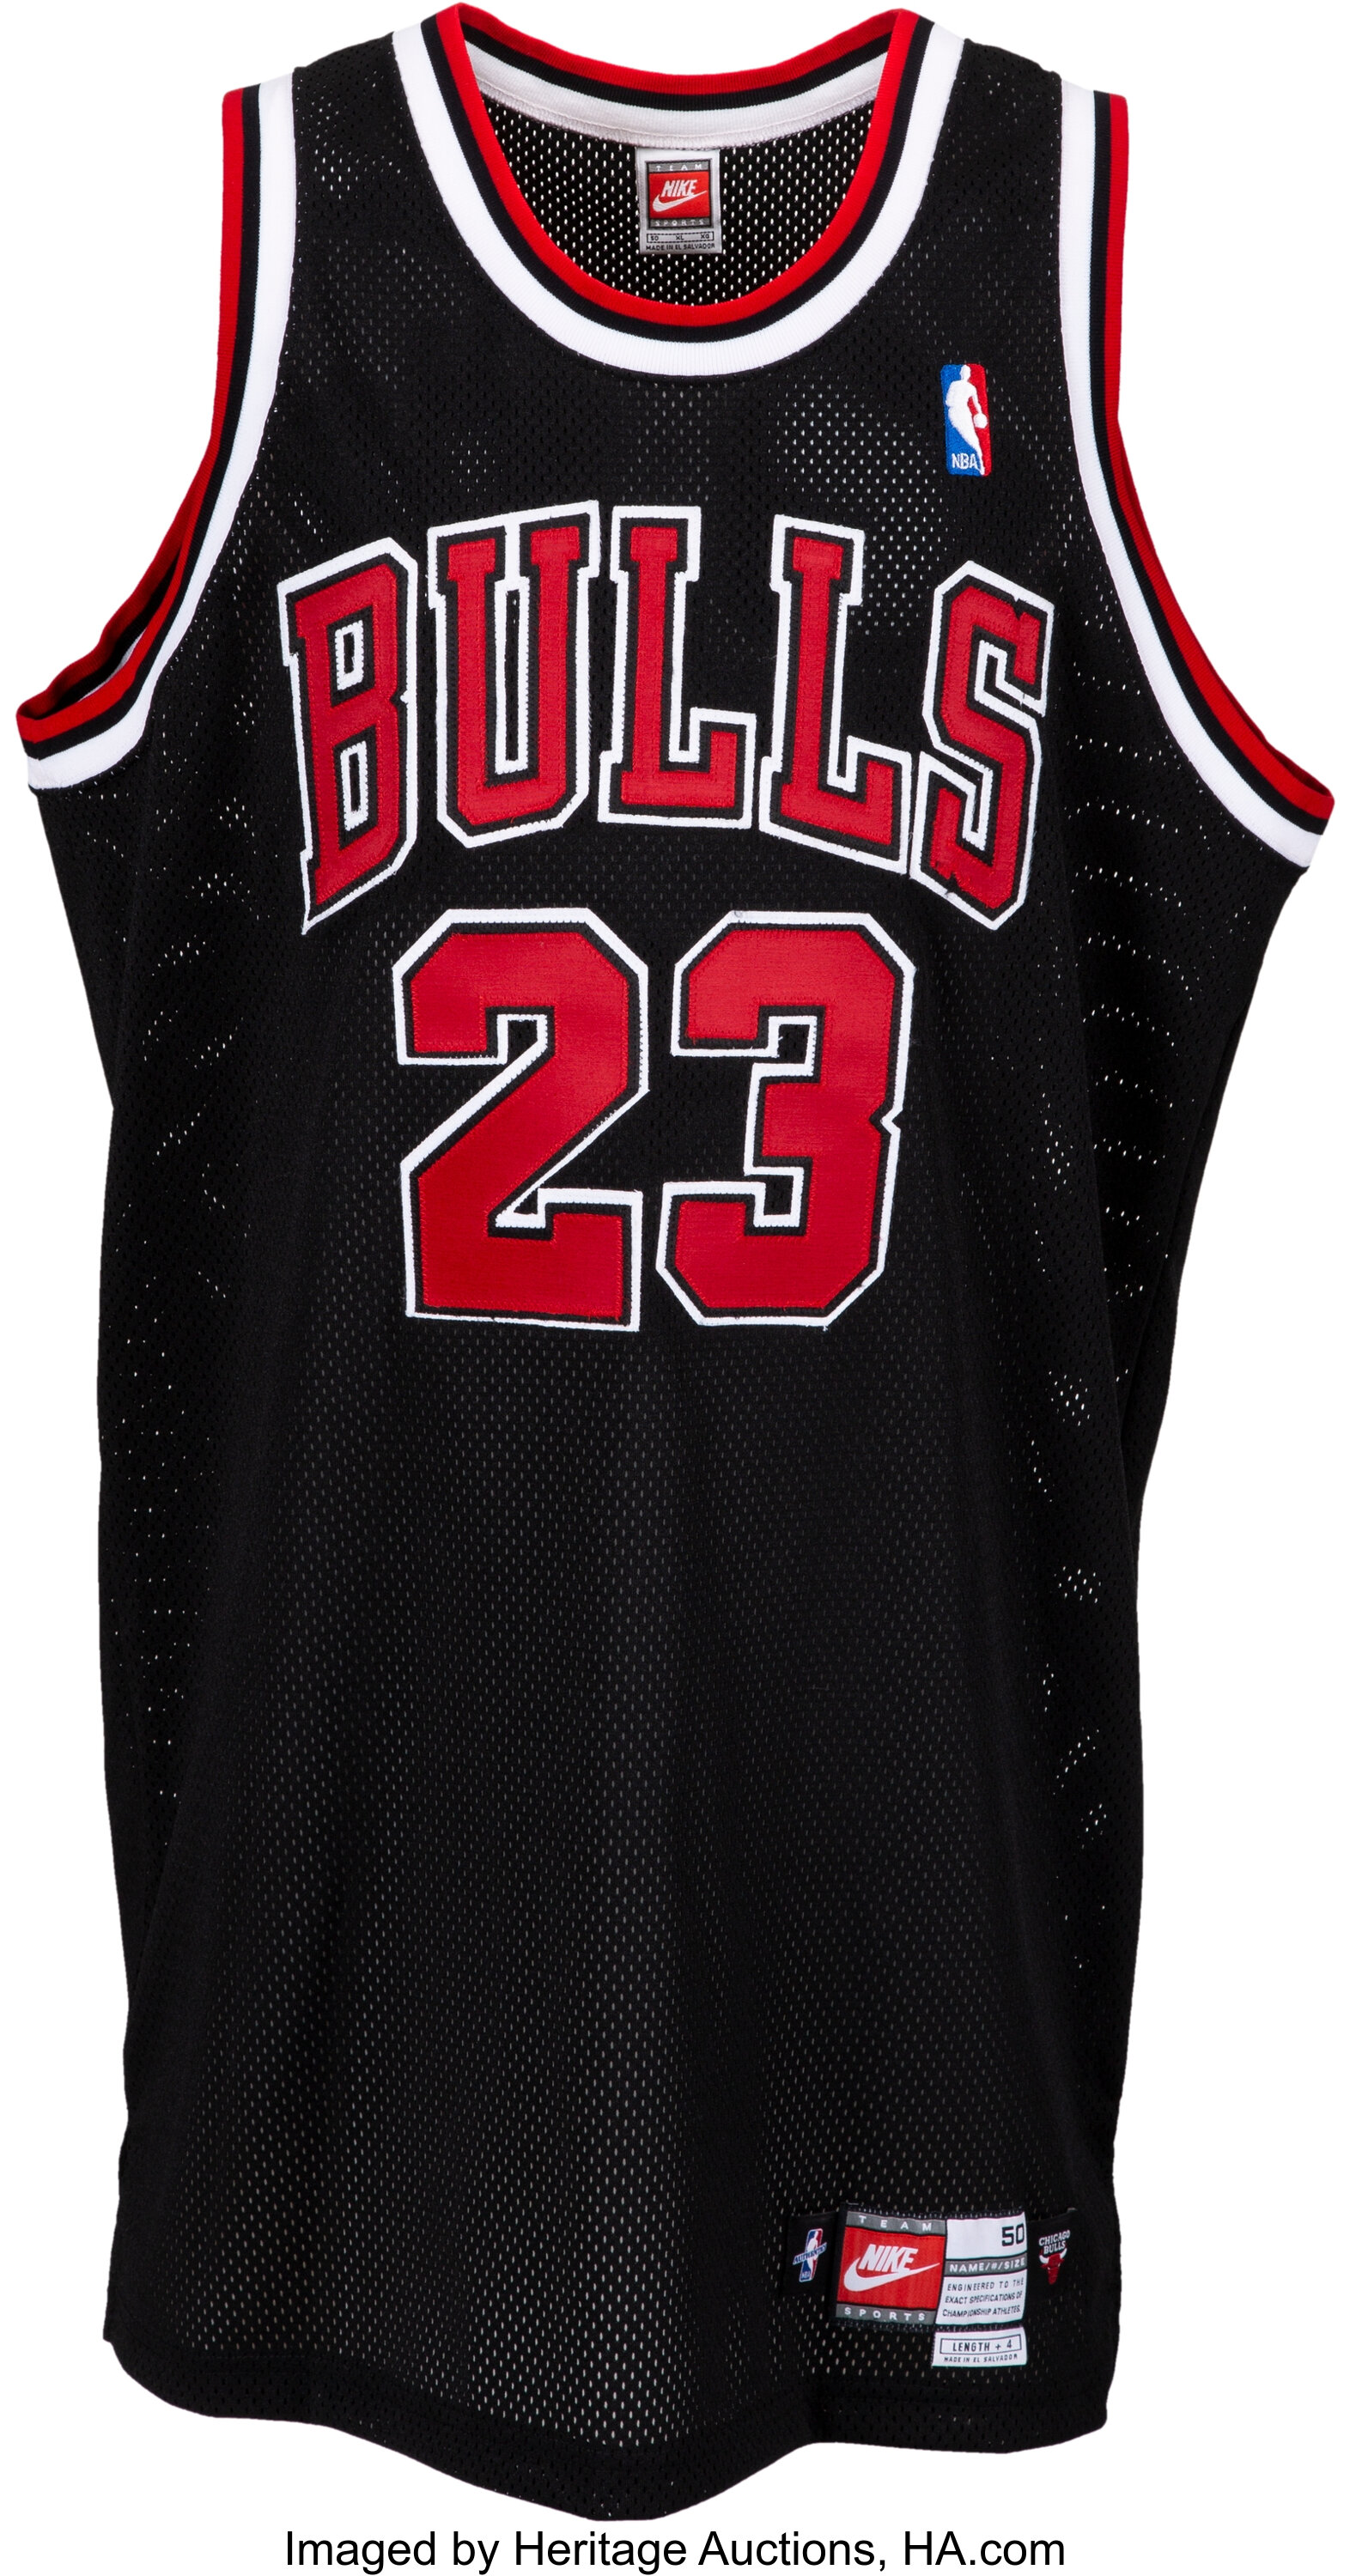 Michael Jordan Autographed Red Chicago Bulls Jersey - The Autograph Source